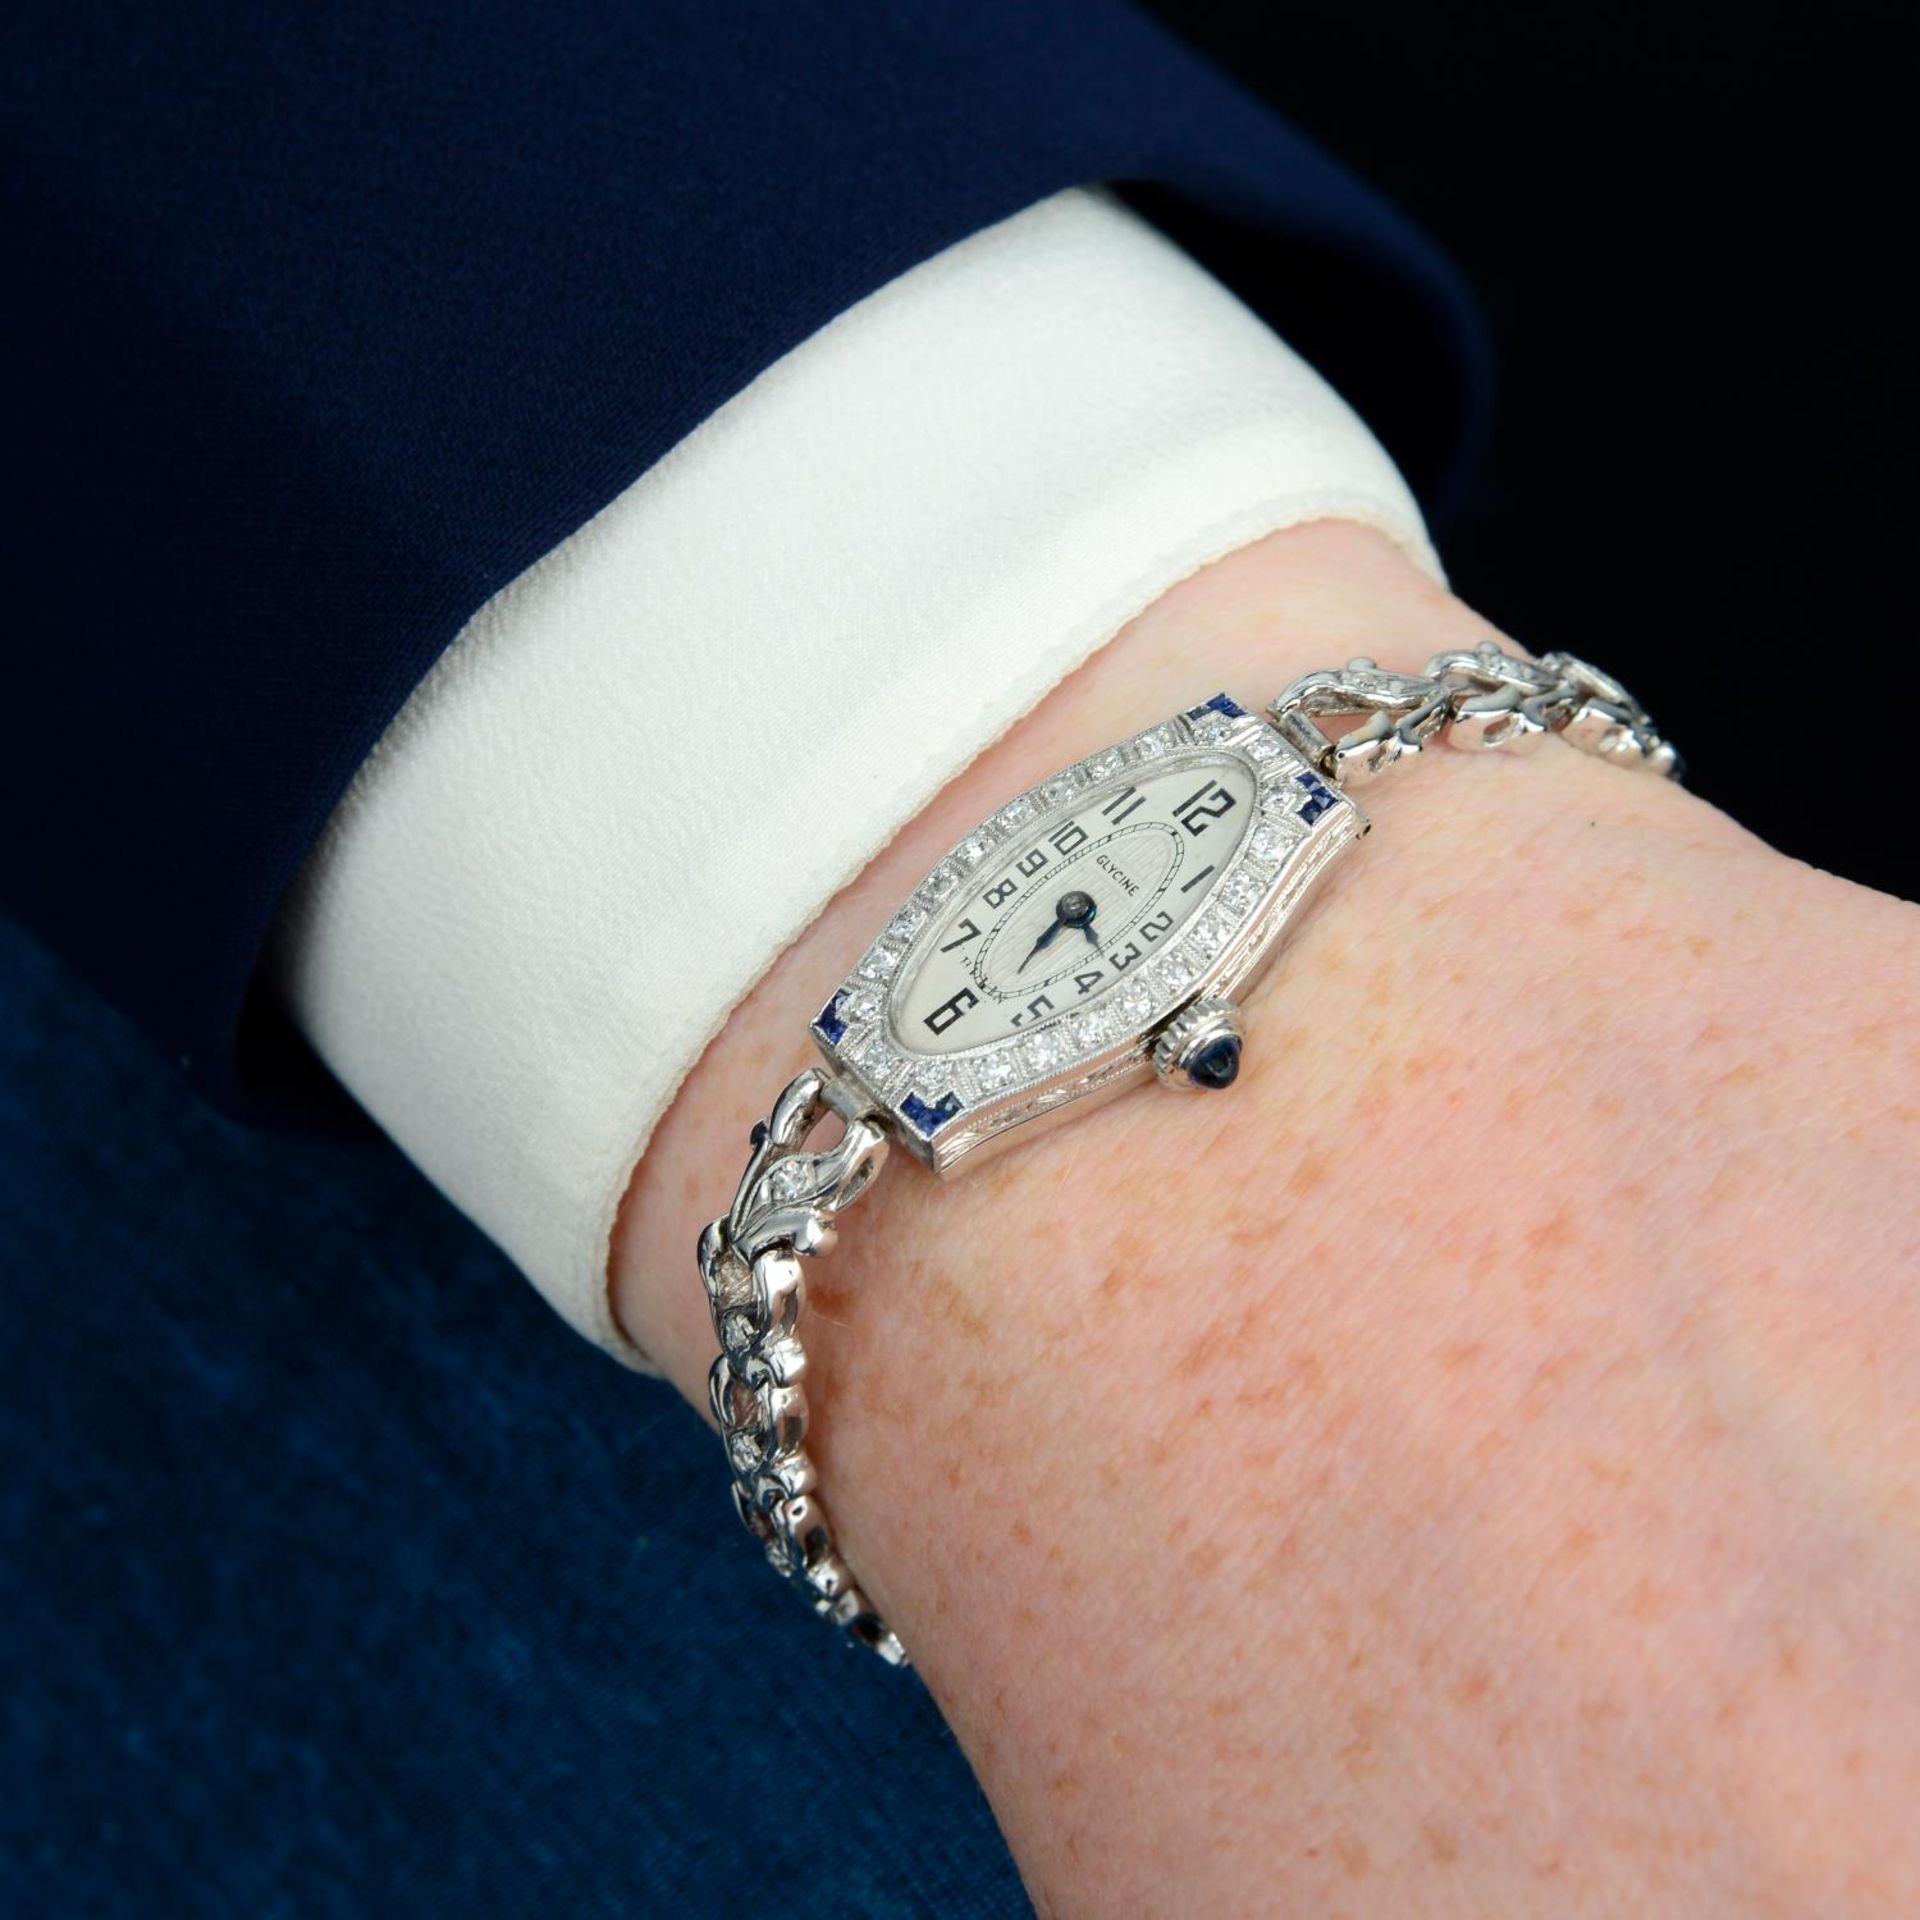 A lady's diamond cocktail watch by Glycine. - Image 3 of 5